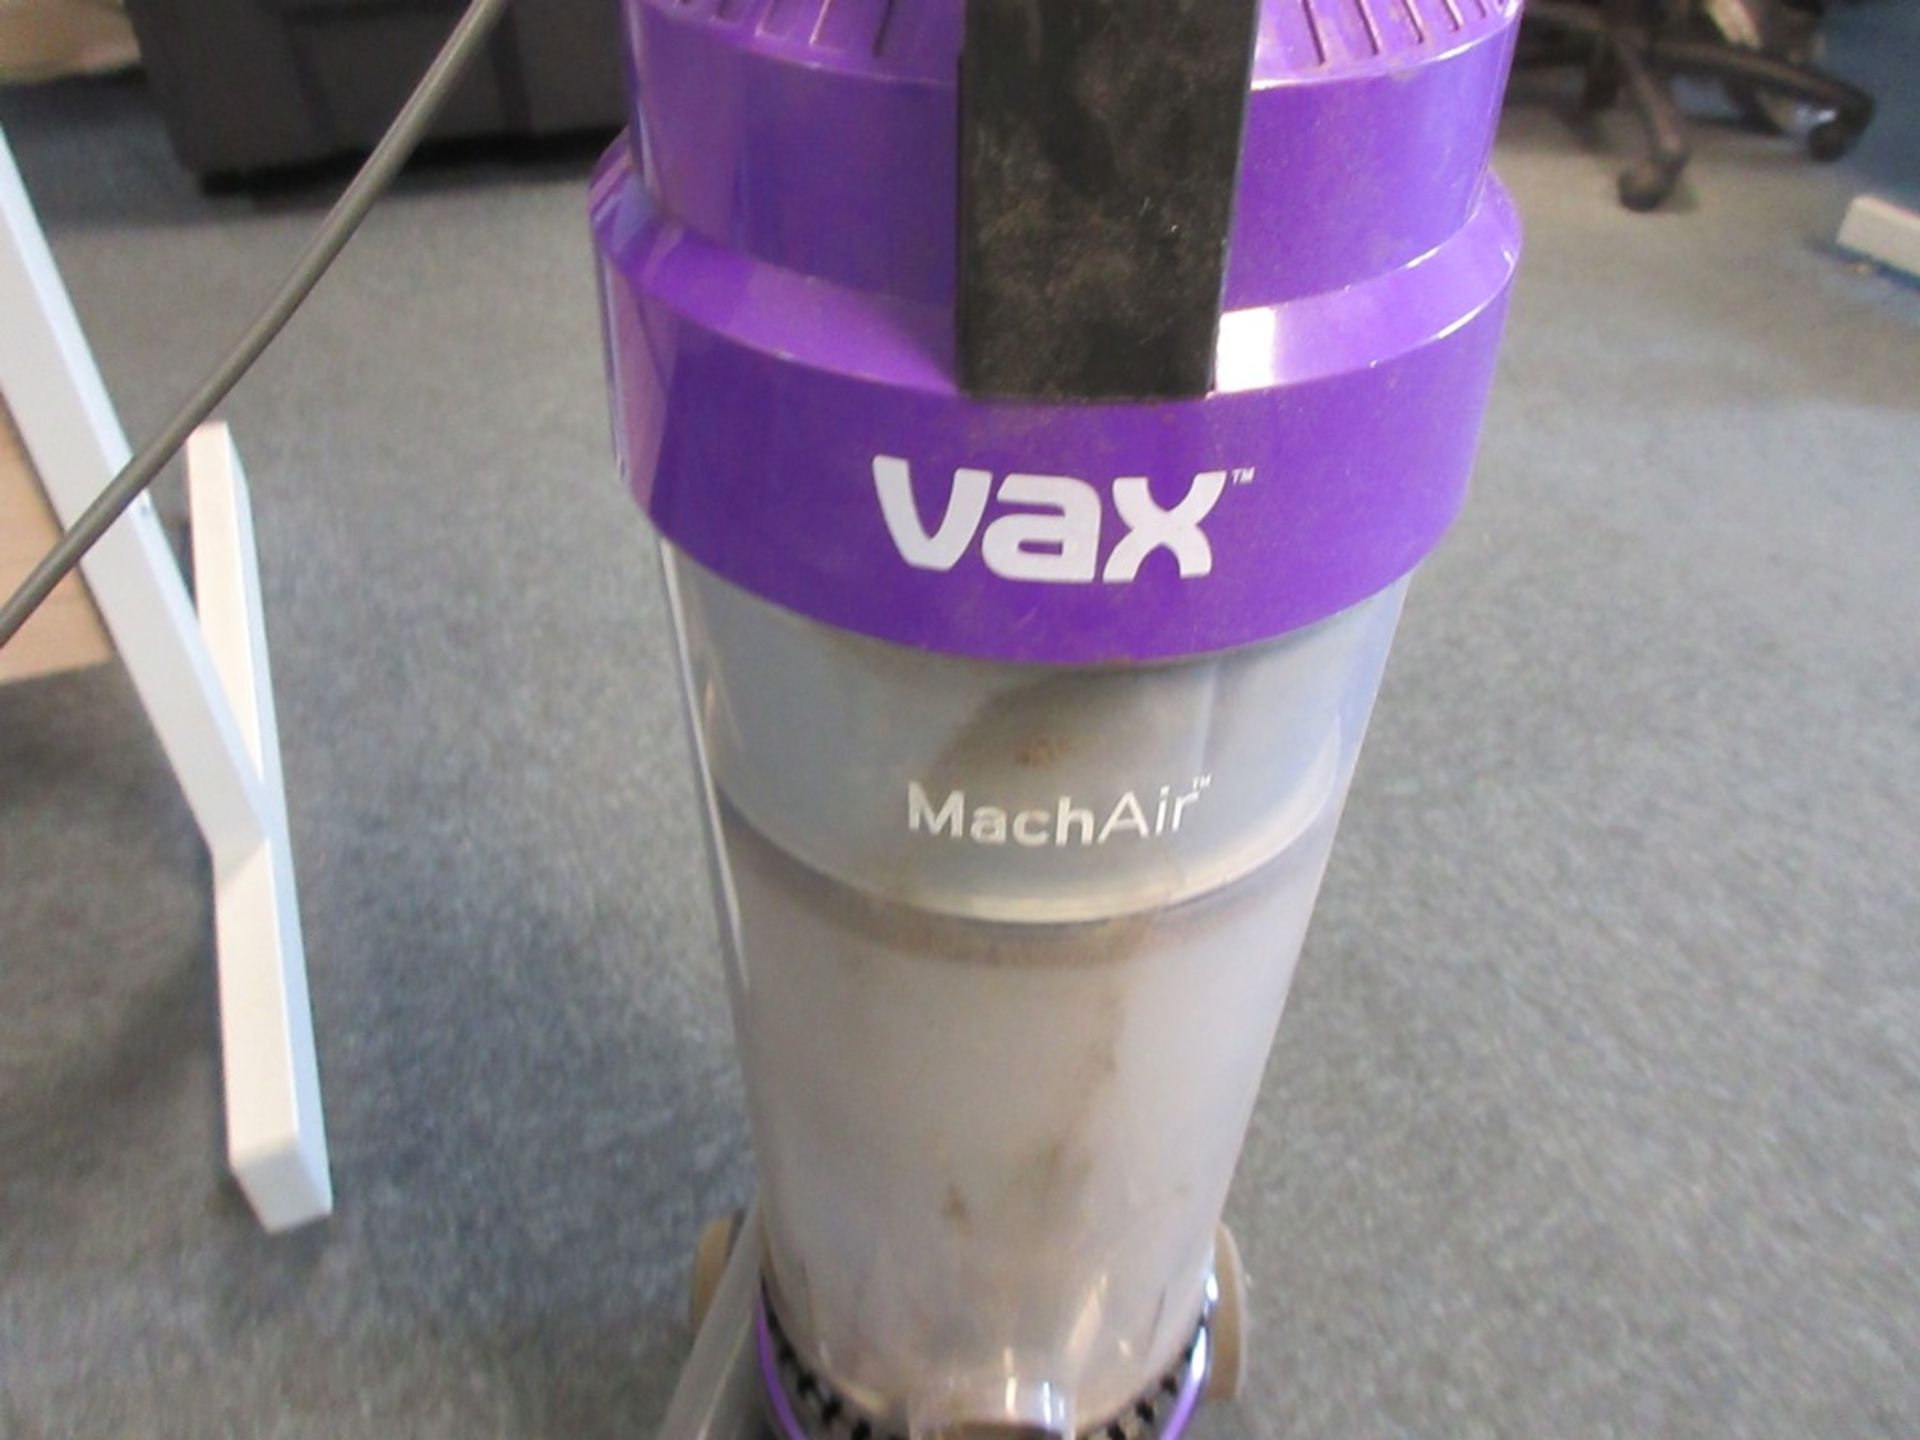 Vax Match Air Upright vacuum, 240v - Image 2 of 3